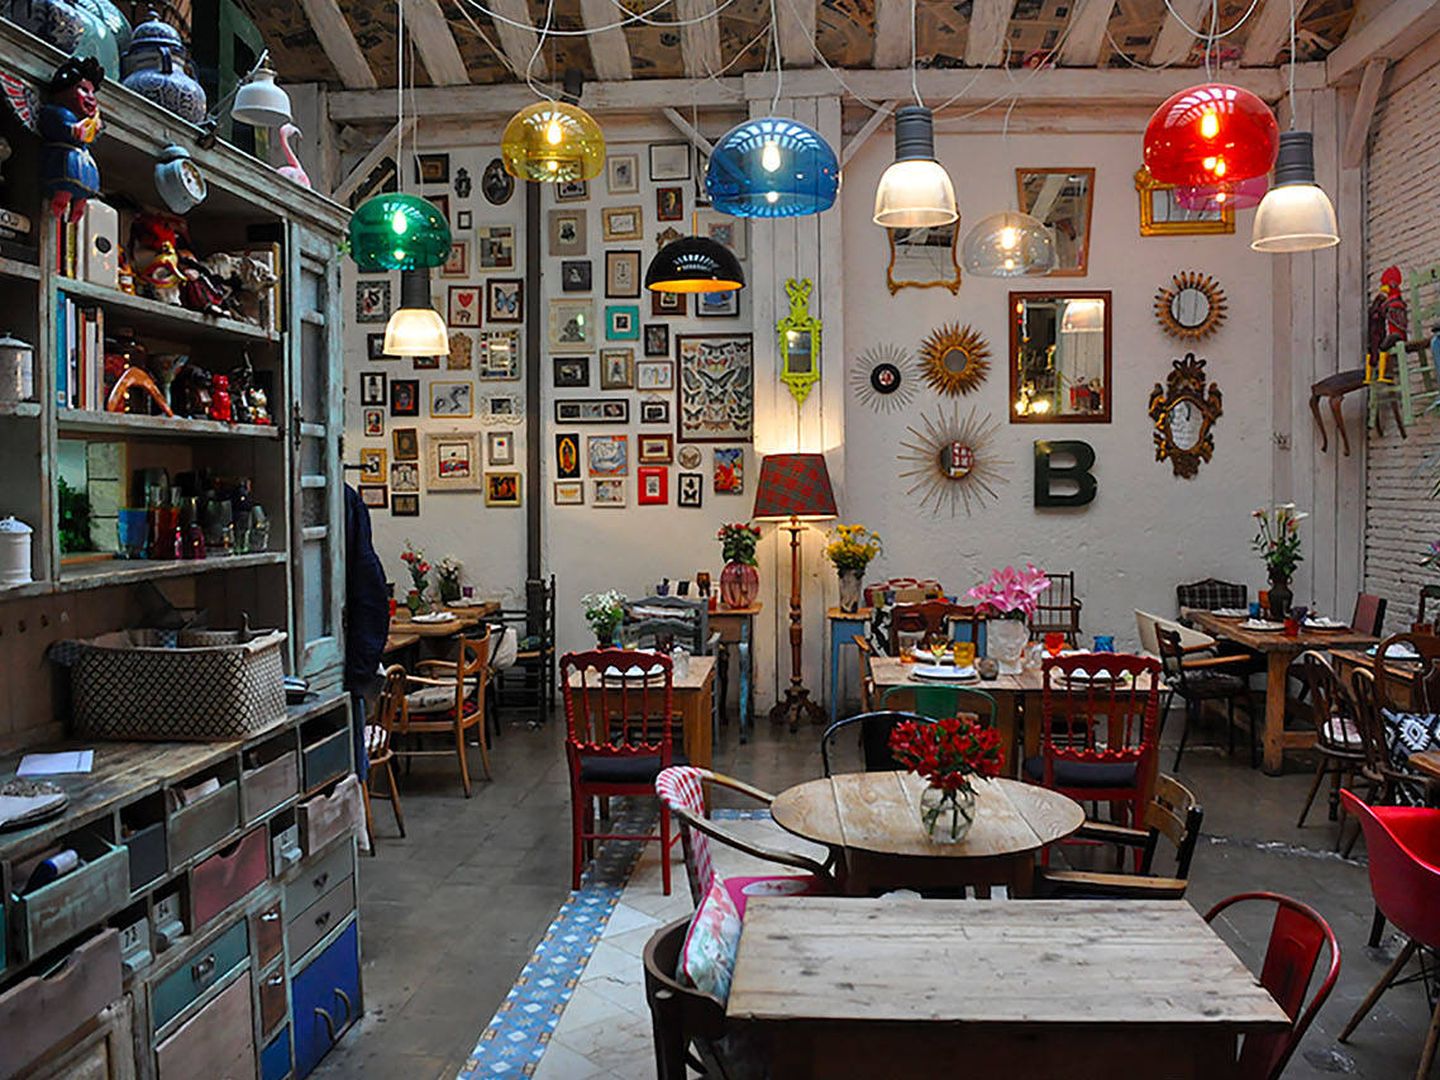 Ric 27 un restaurante de comida italiana con alma de almoneda. (Imagen: Cortesía Comecome Zaragoza)